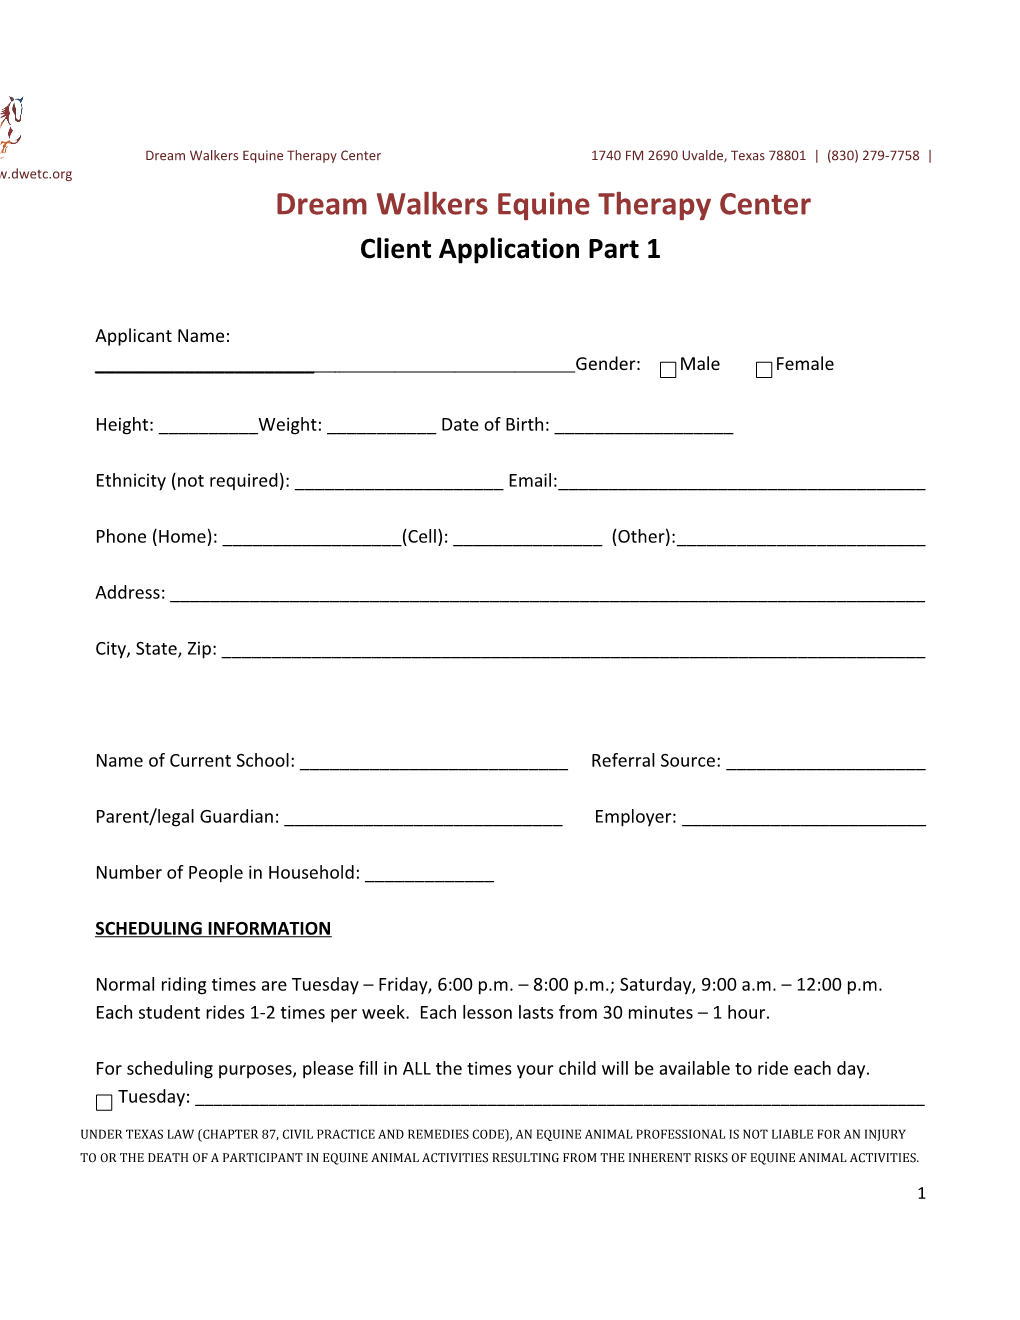 Dream Walkers Equine Therapy Center 1740 FM 2690 Uvalde, Texas 78801 (830) 279-7758